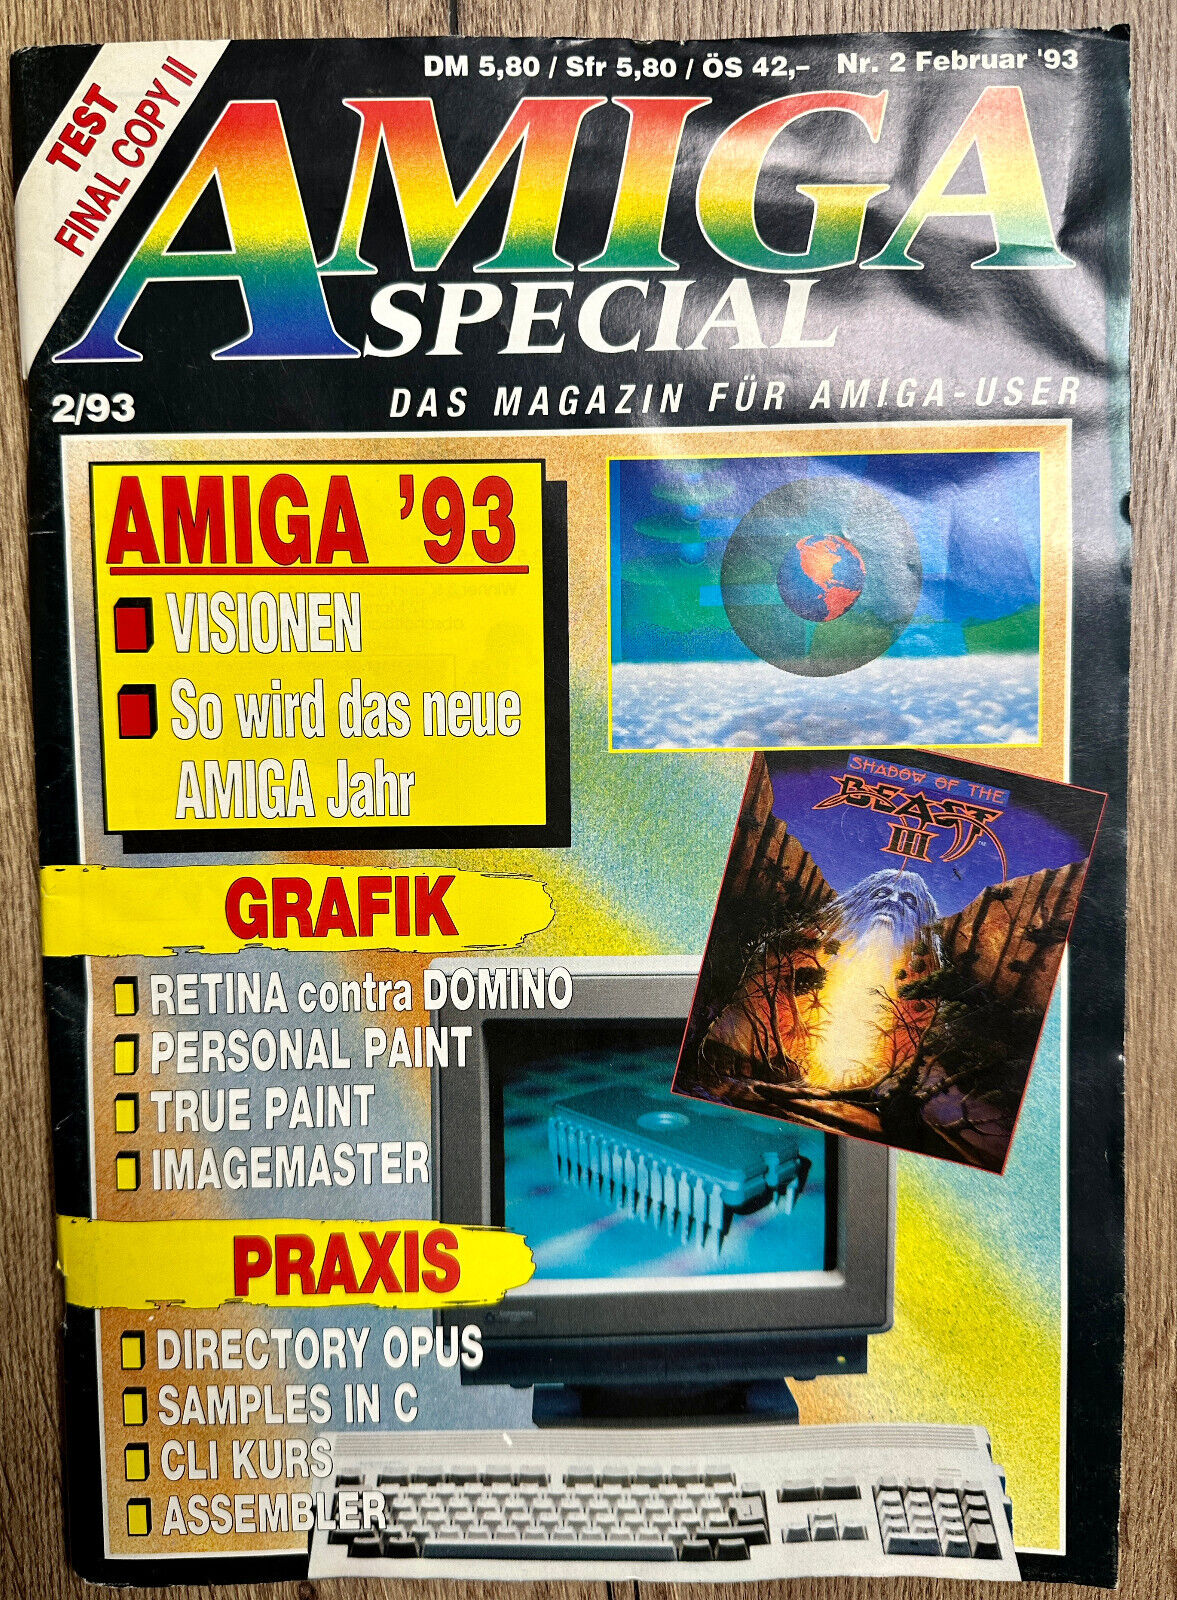 Amiga Special 2/93 - The Magazine for Amiga Users / Top / Rare